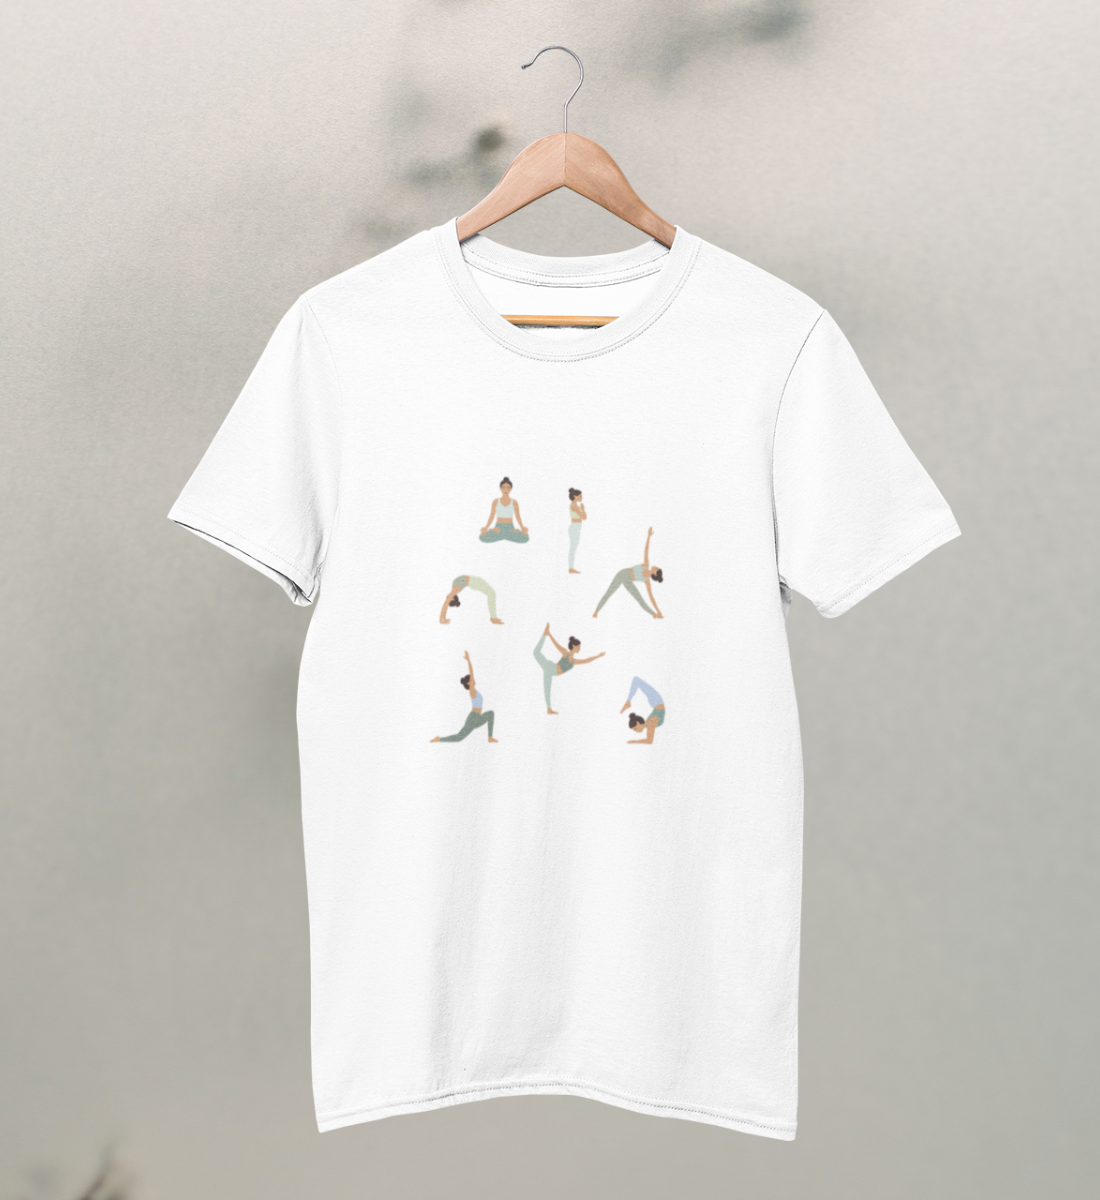 asanas l yoga shirt für kinder weiß l kinder kleidung l yoga fashion kinder l nachhaltig im alltag mit veganer mode